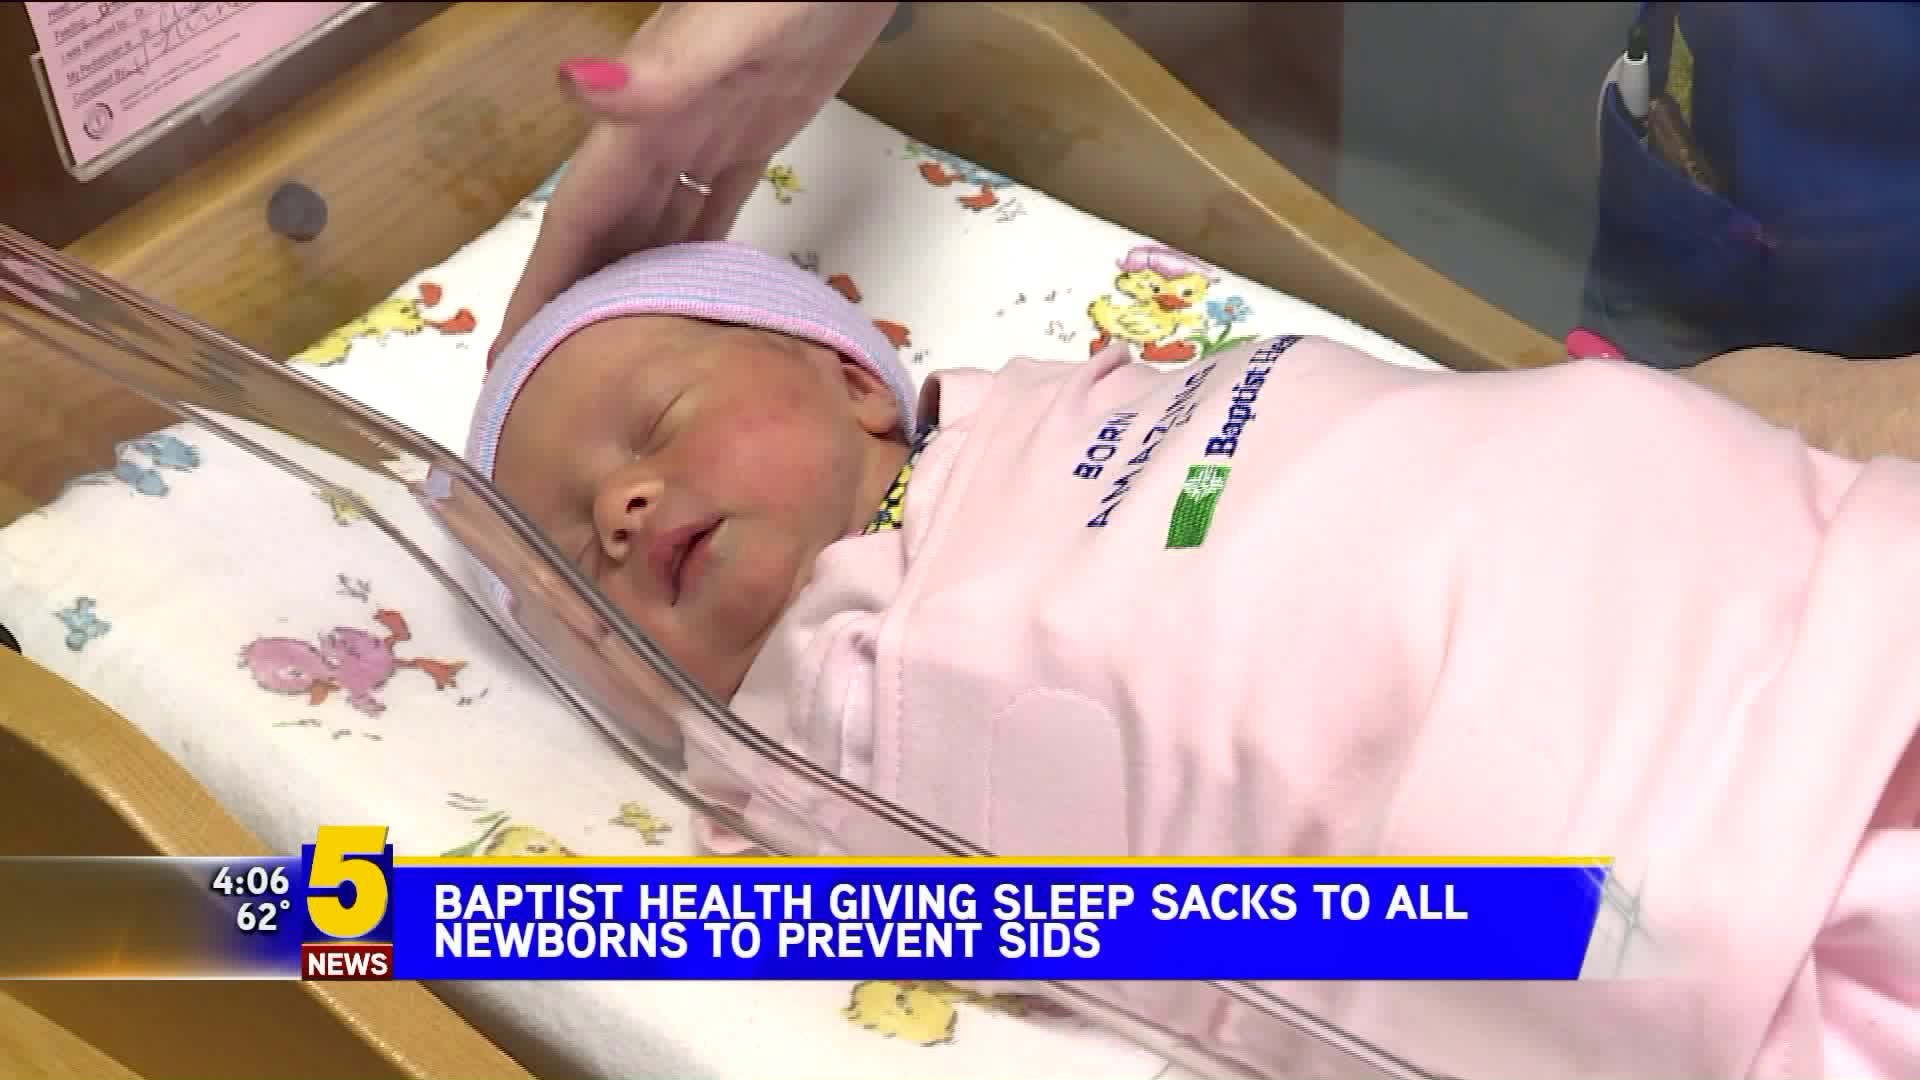 Baptist Health Giving Sleep Sacks To All Newborns To Prevent SIDS